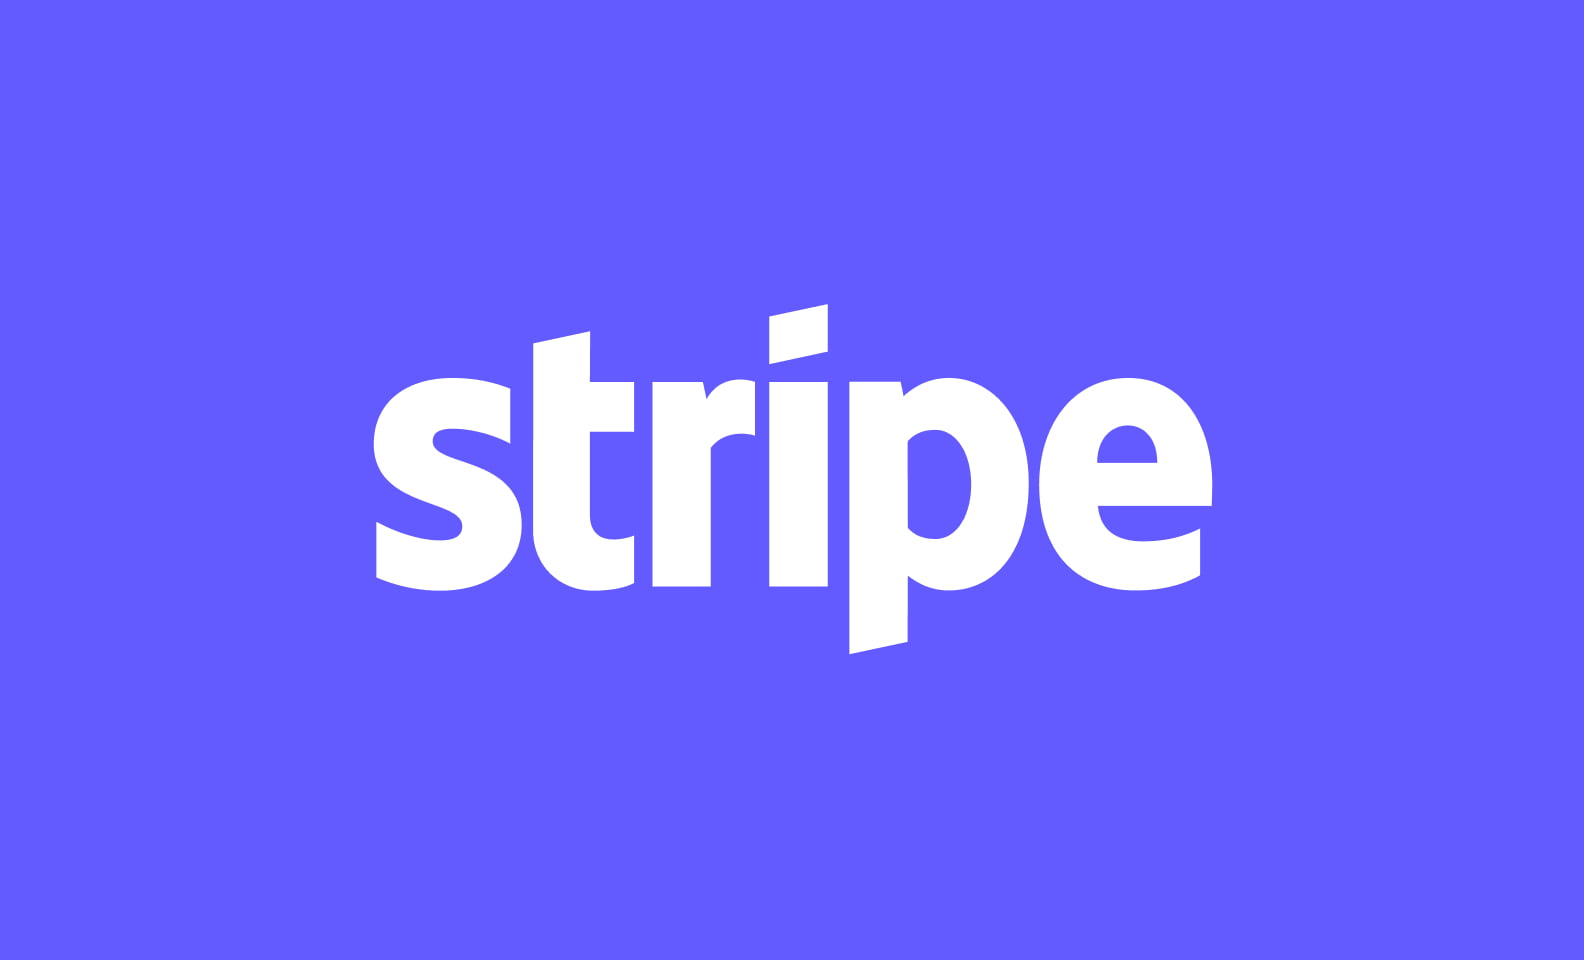 Stripe fintech company logo